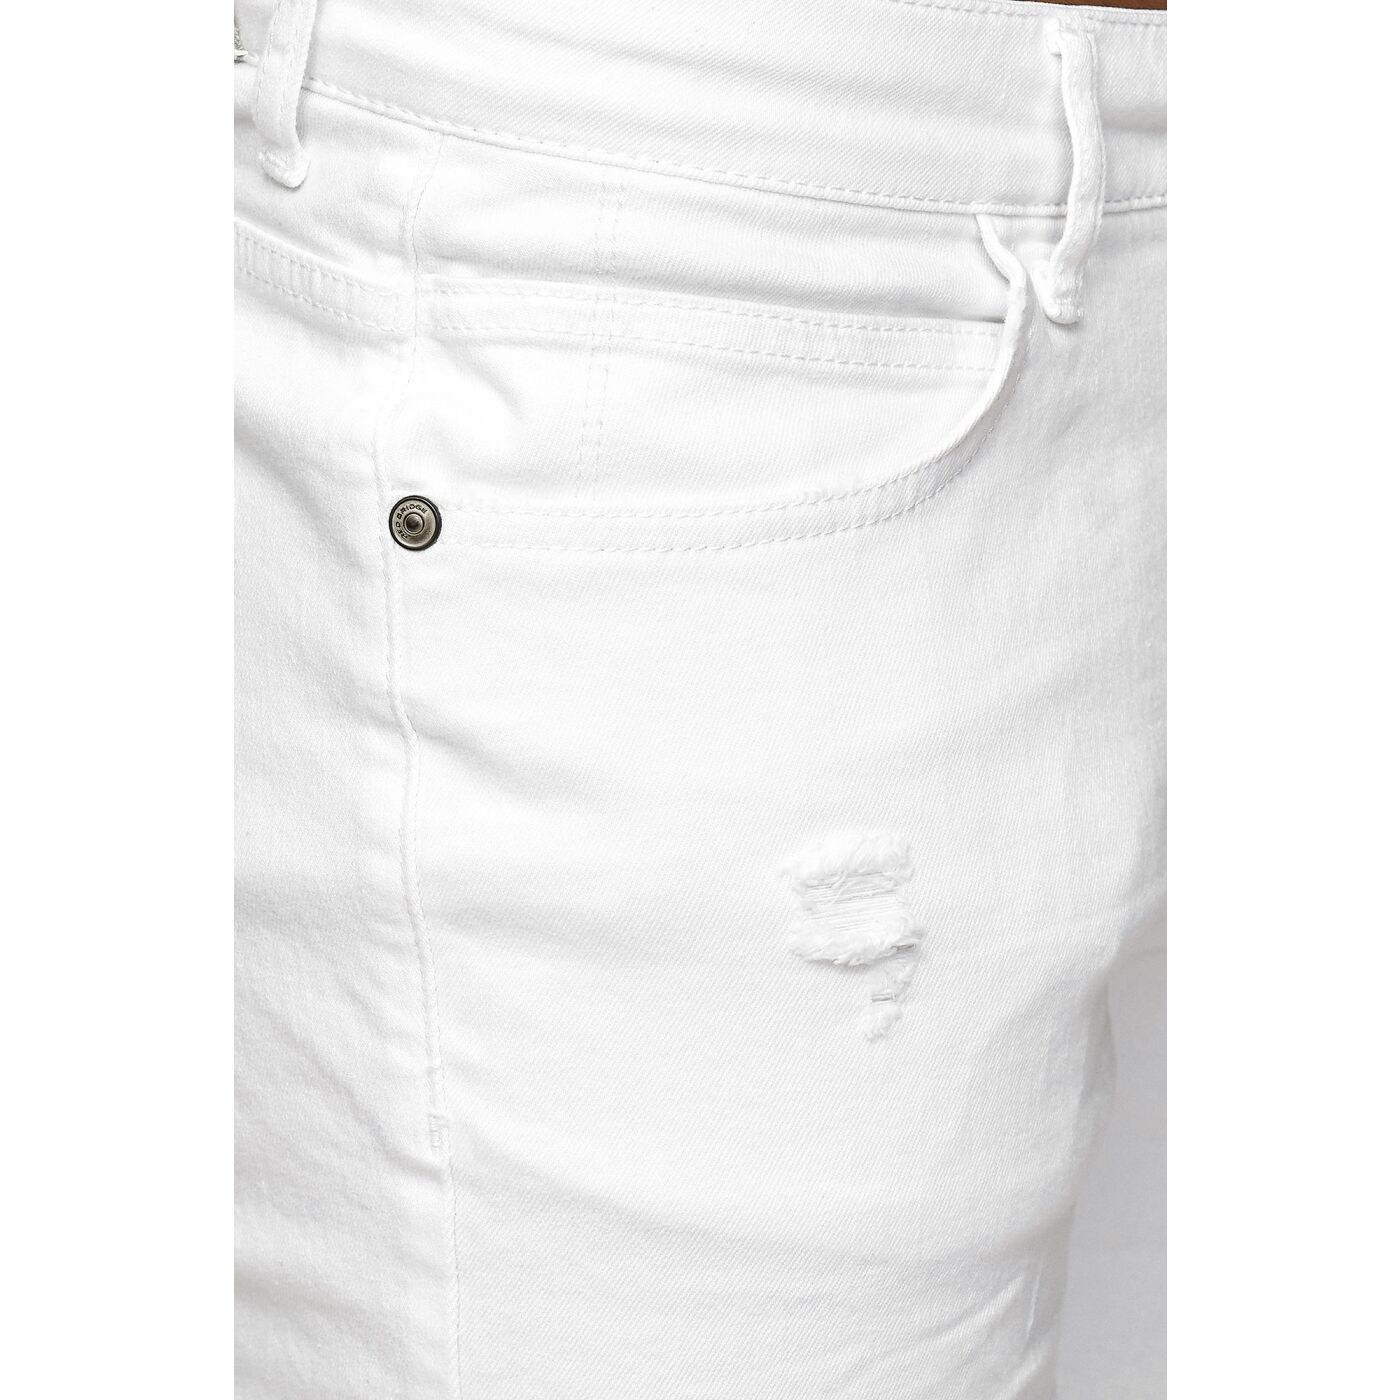 white pant jeans